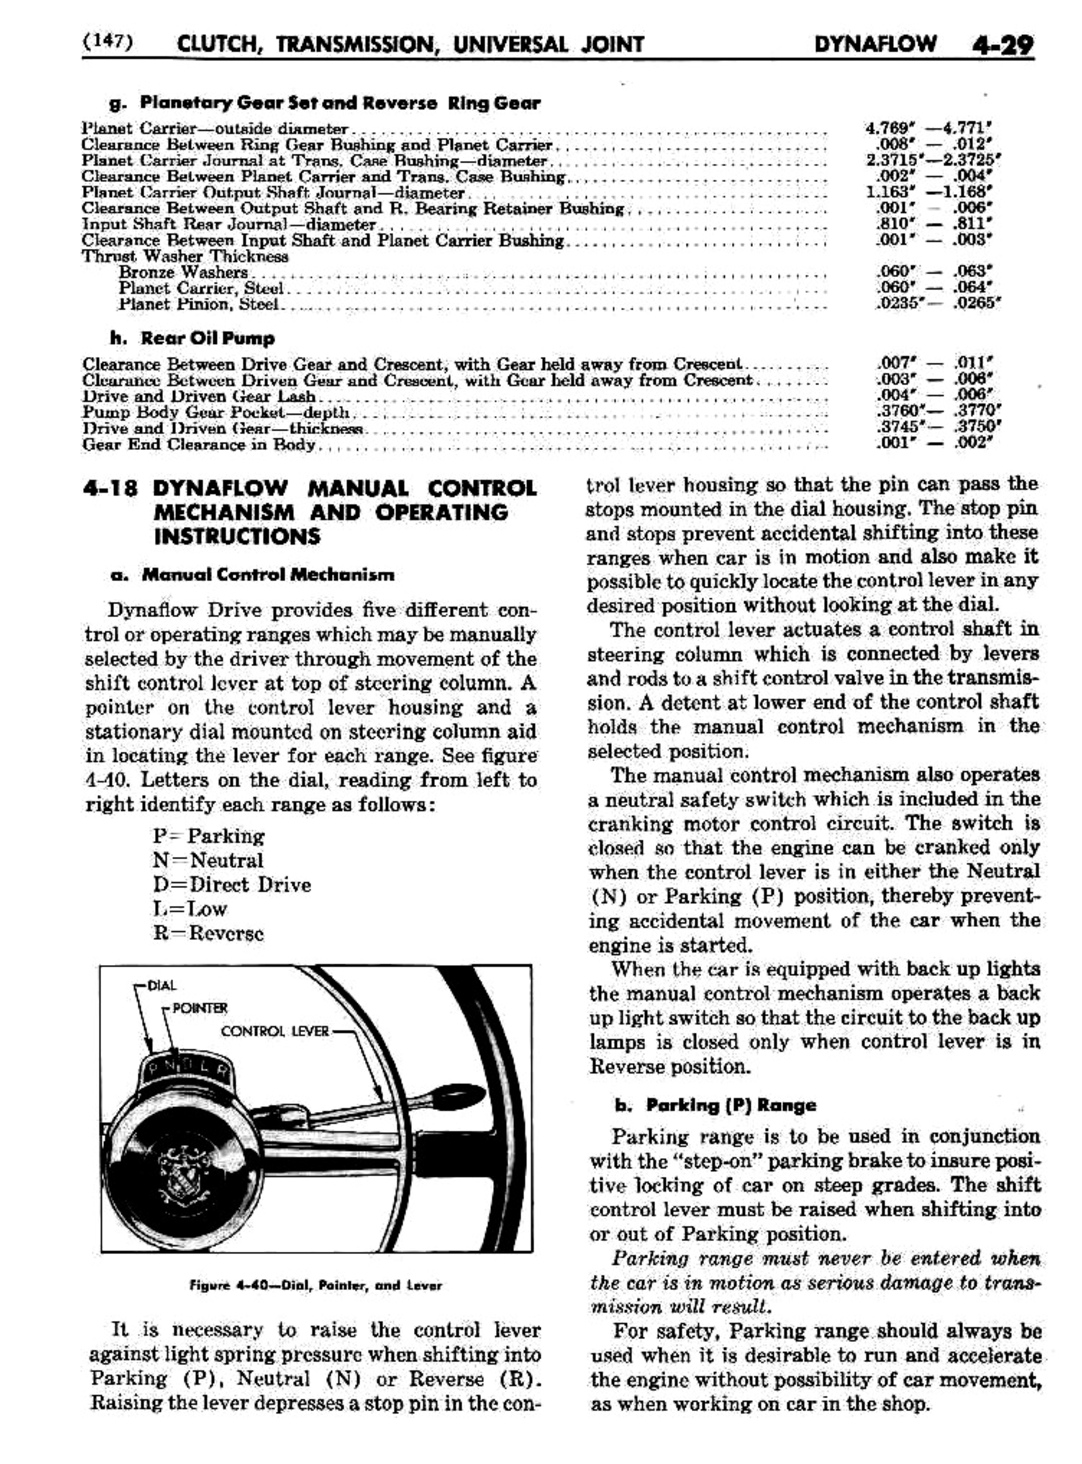 n_05 1951 Buick Shop Manual - Transmission-029-029.jpg